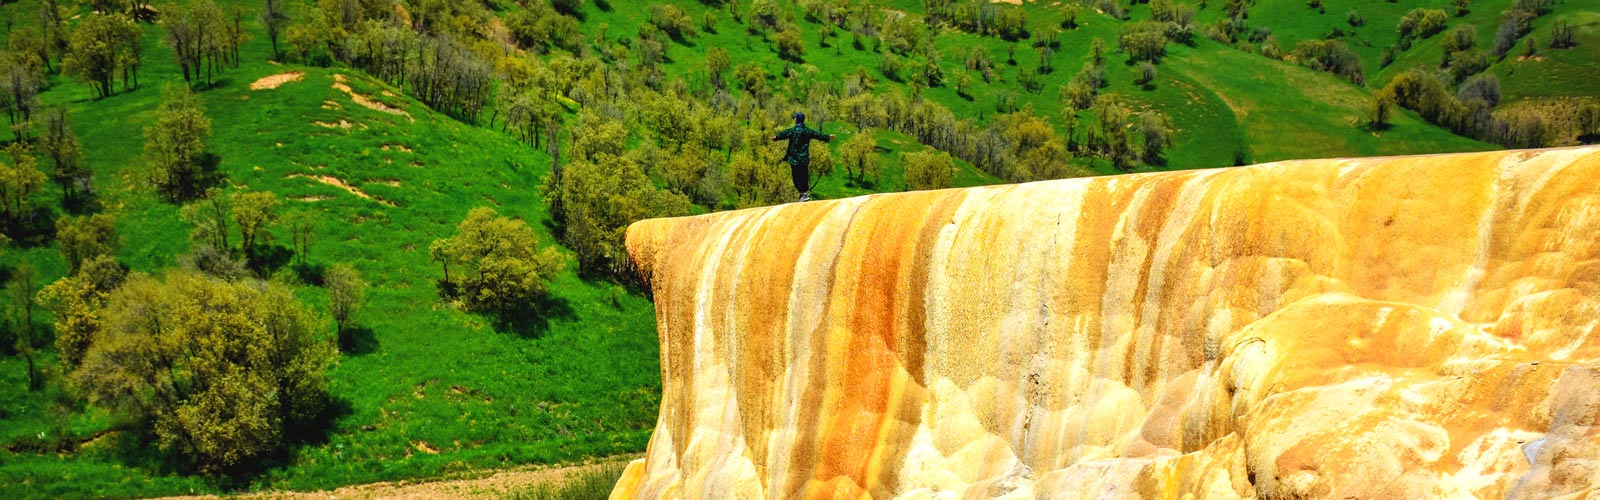 آبشار شلماش و چشمه گراوان